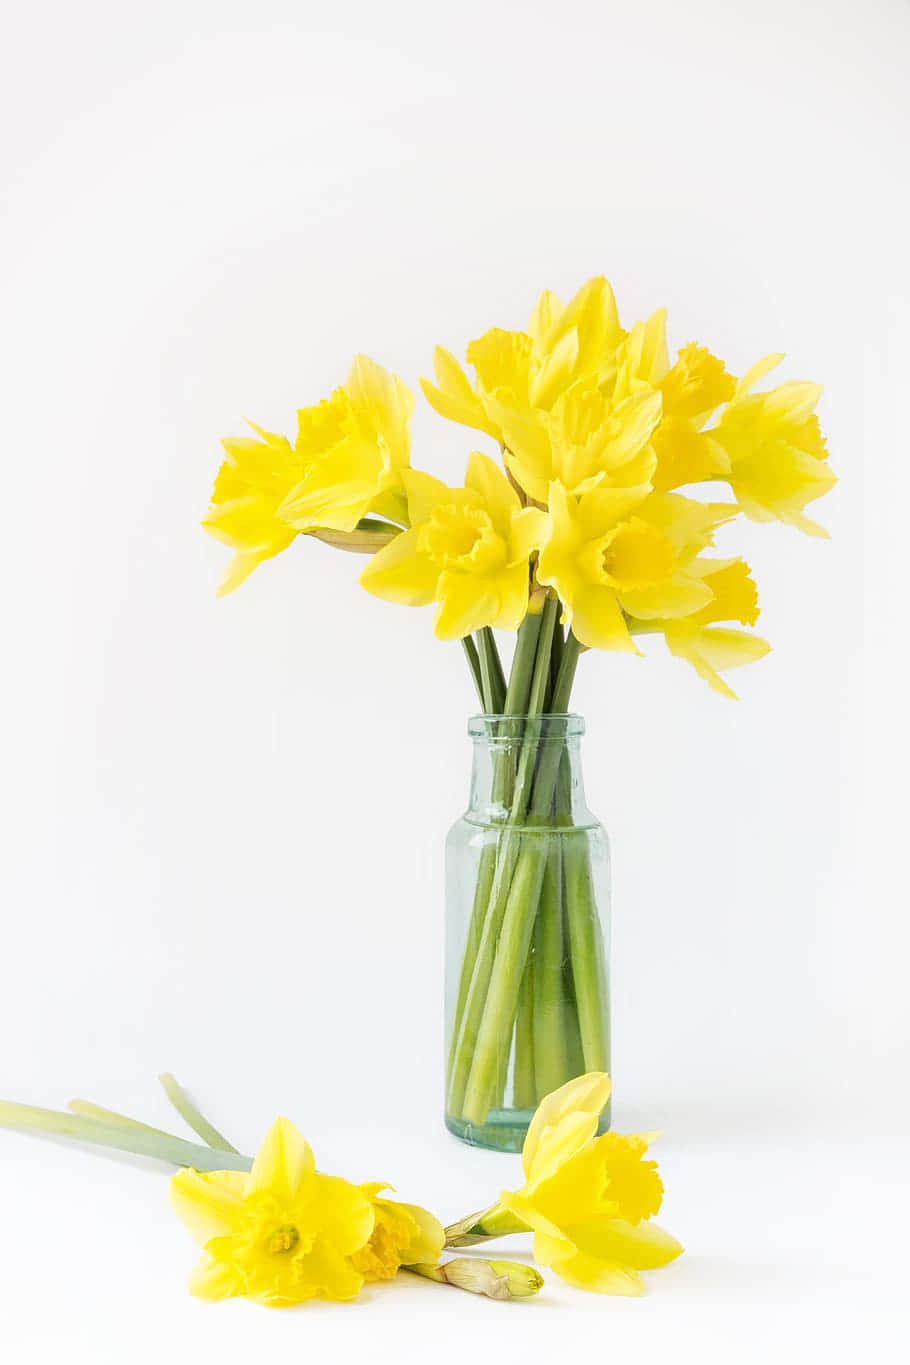 Yellow Daffodilsin Glass Vase Wallpaper